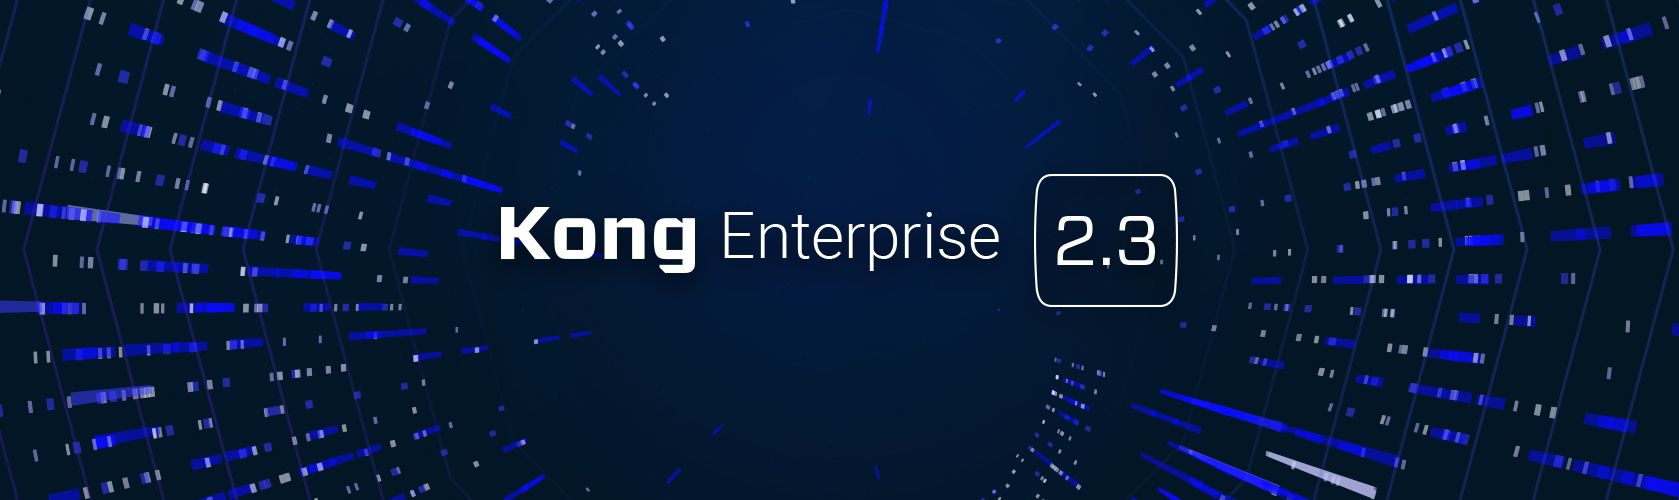 Kong Gateway Enterprise 2.3 Now Generally Available!